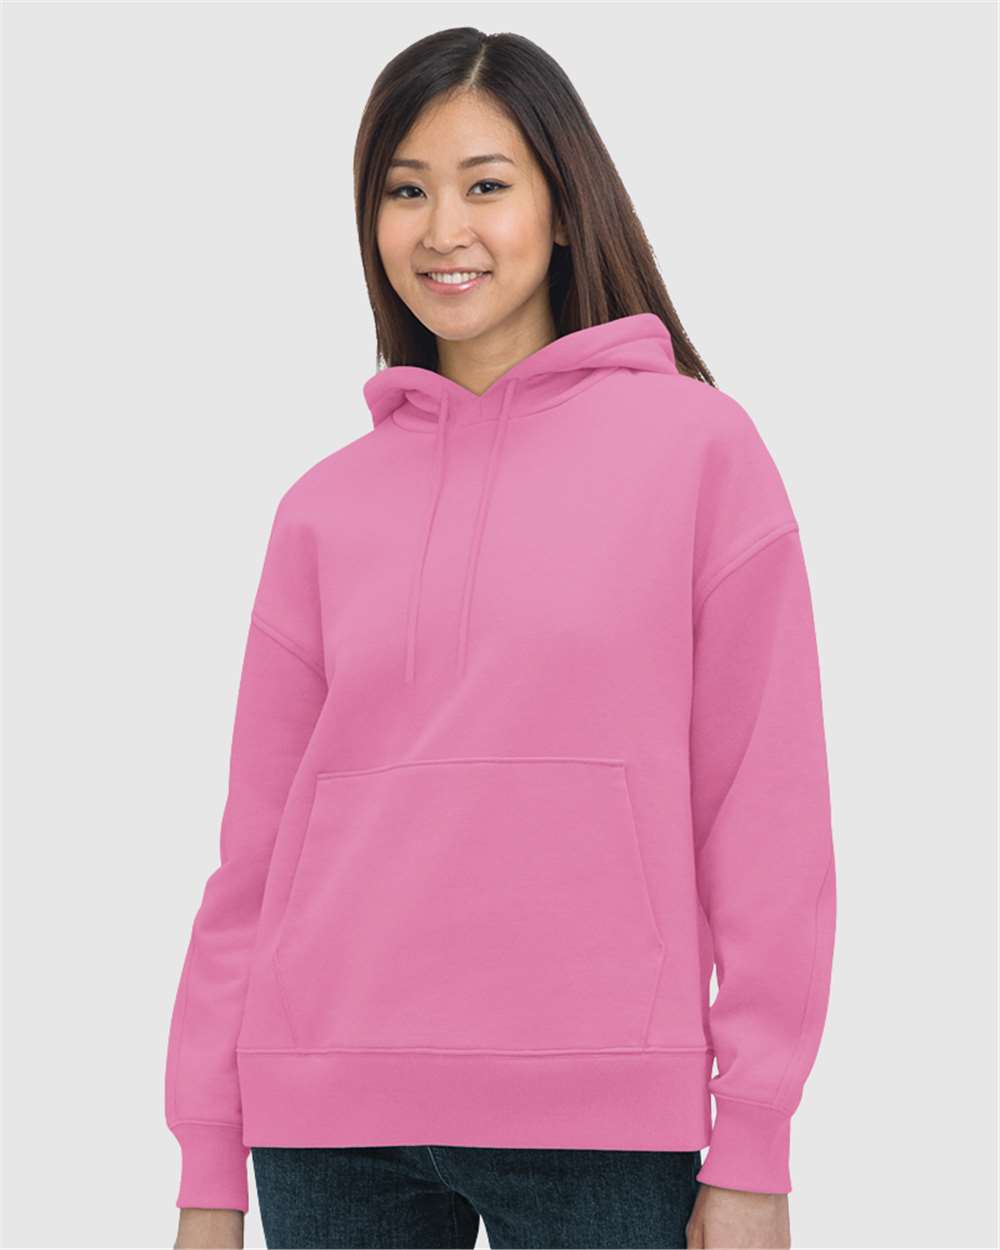 Bayside 7760 - Women's USA-Made Hooded Sweatshirt